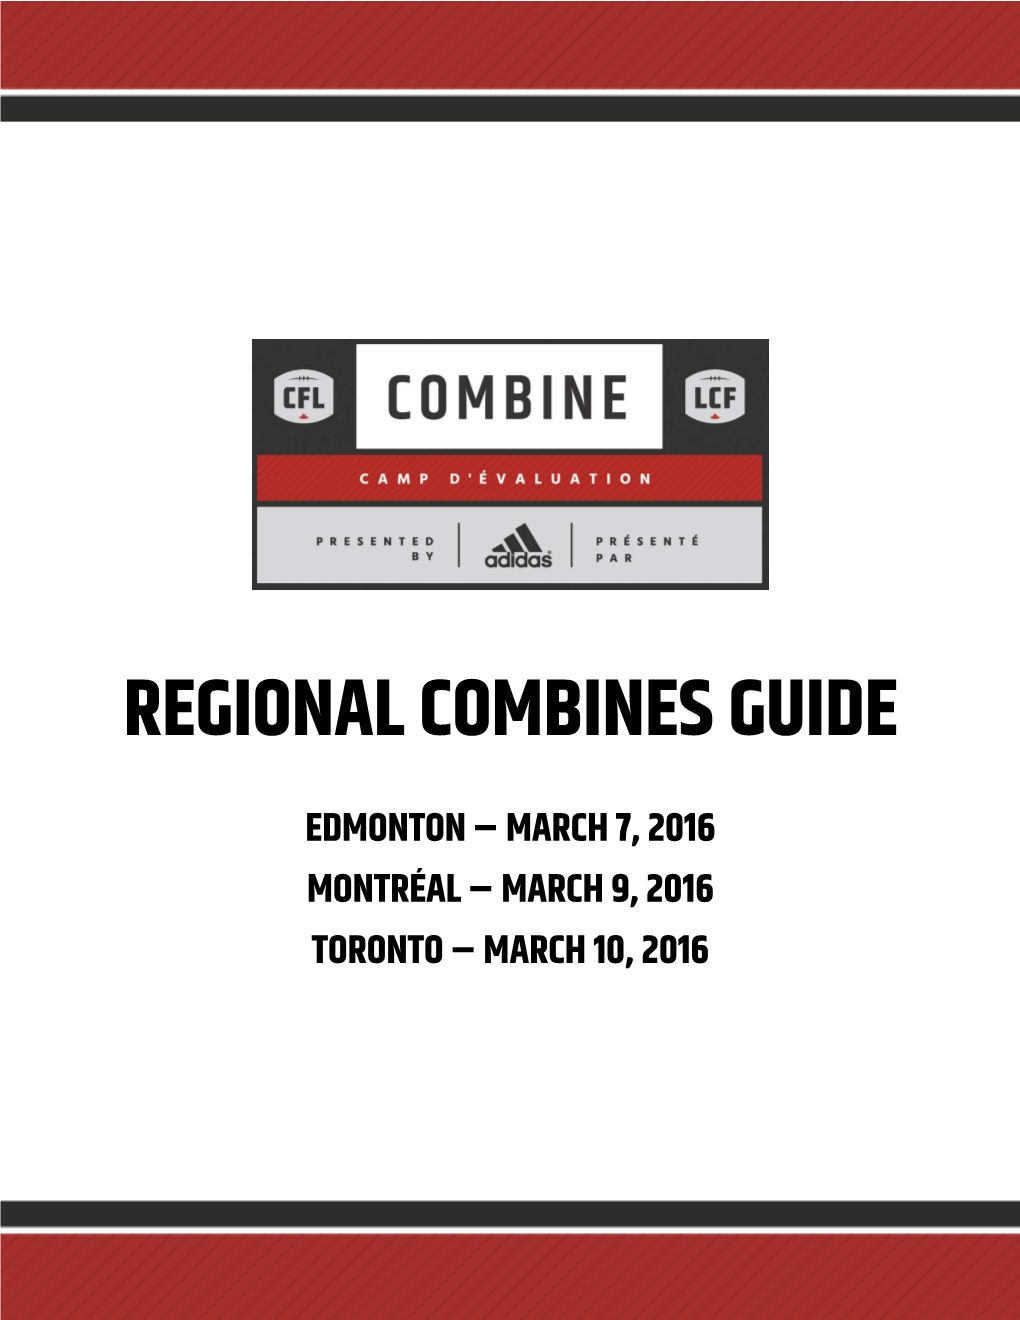 Regional Combines Guide